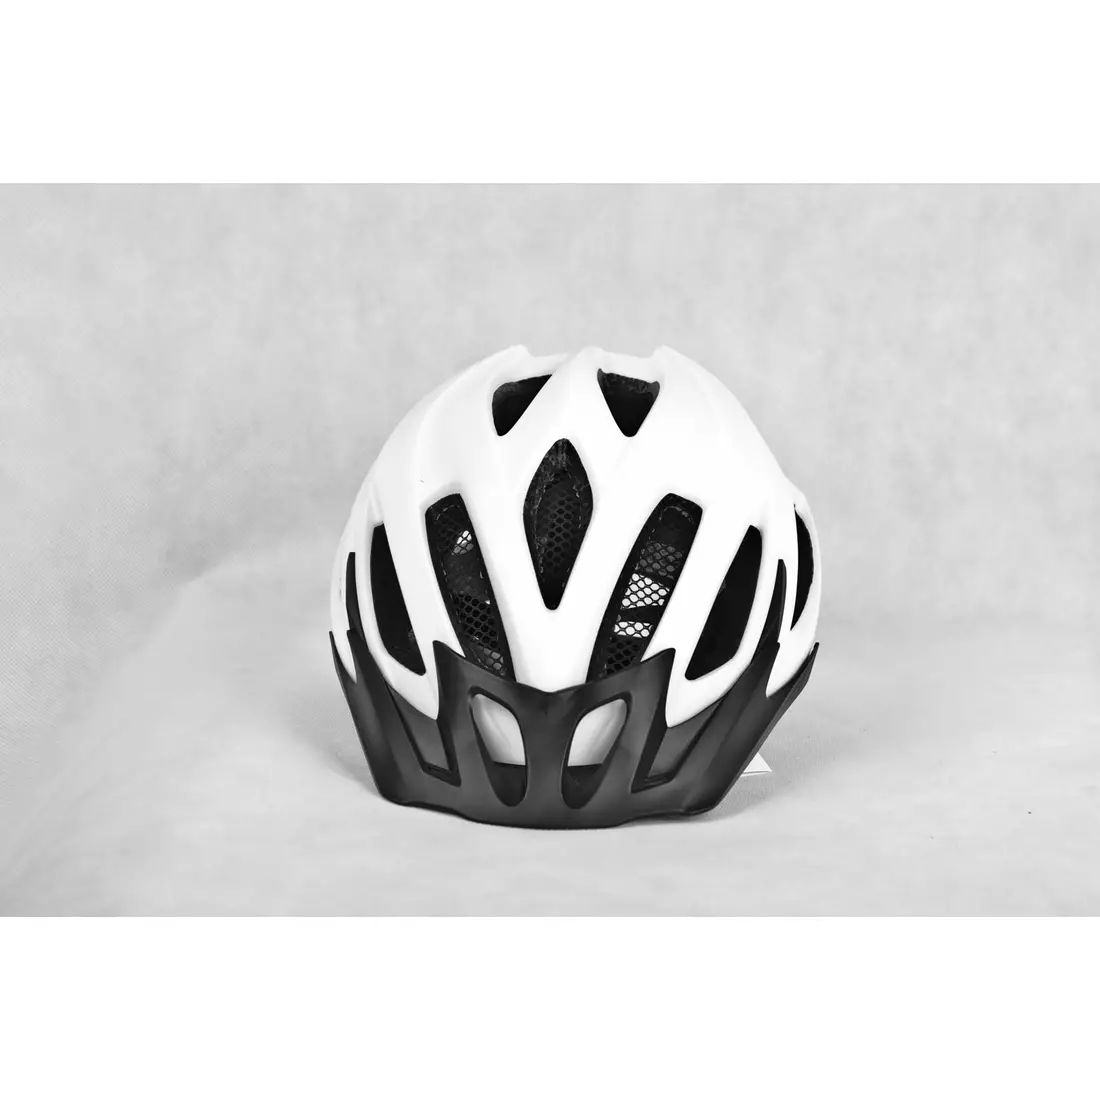 UVEX VIVA 2 cyklistická helma 410104mat03 white mat